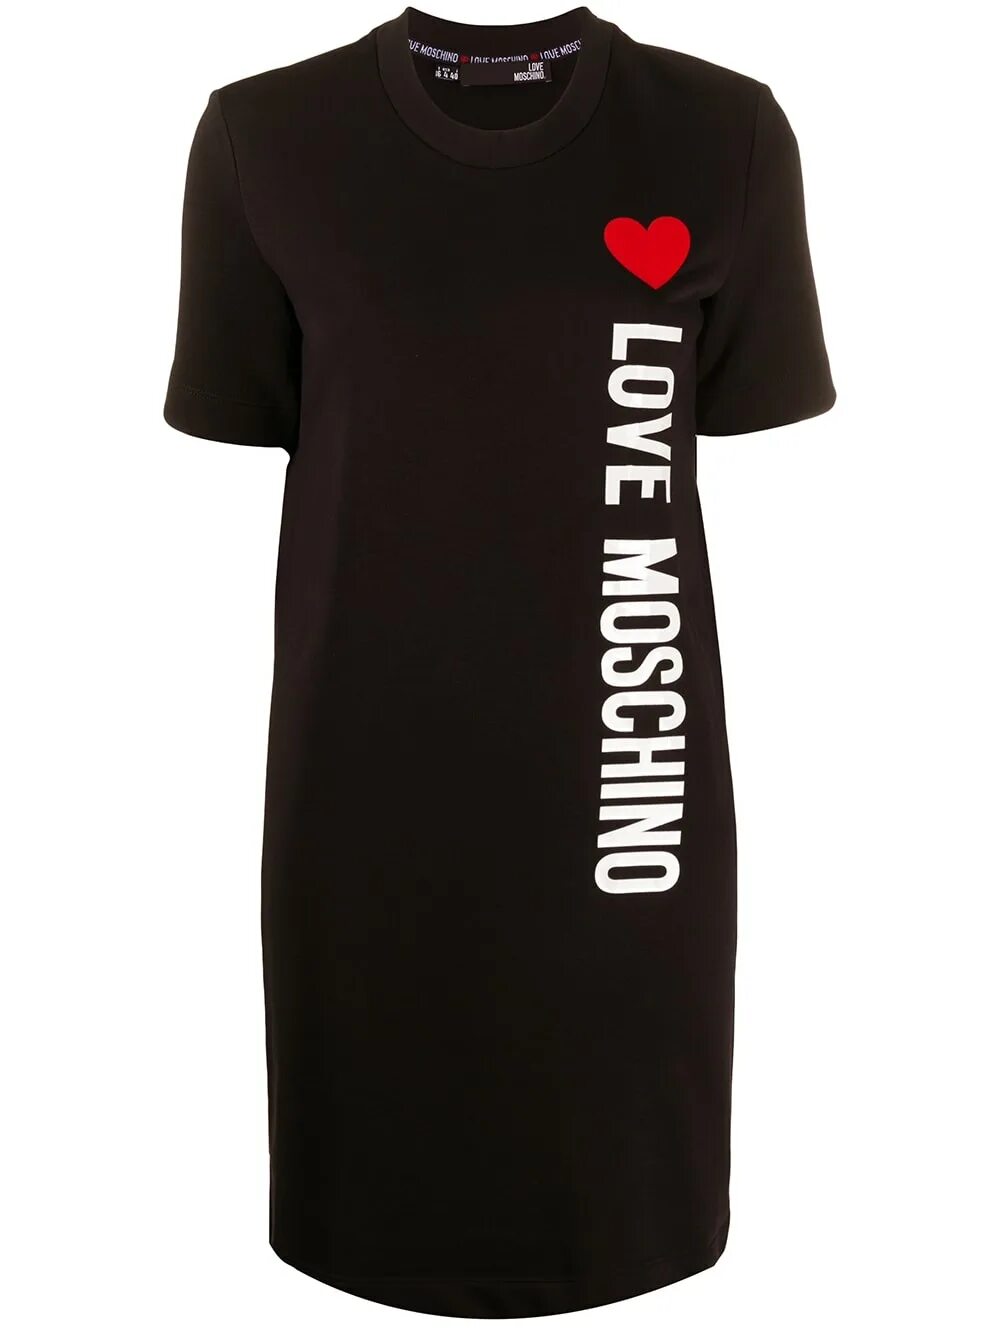 Лав Москино одежда. Love Moschino бренд. Платье лав Москино черное. Платье Moschino.